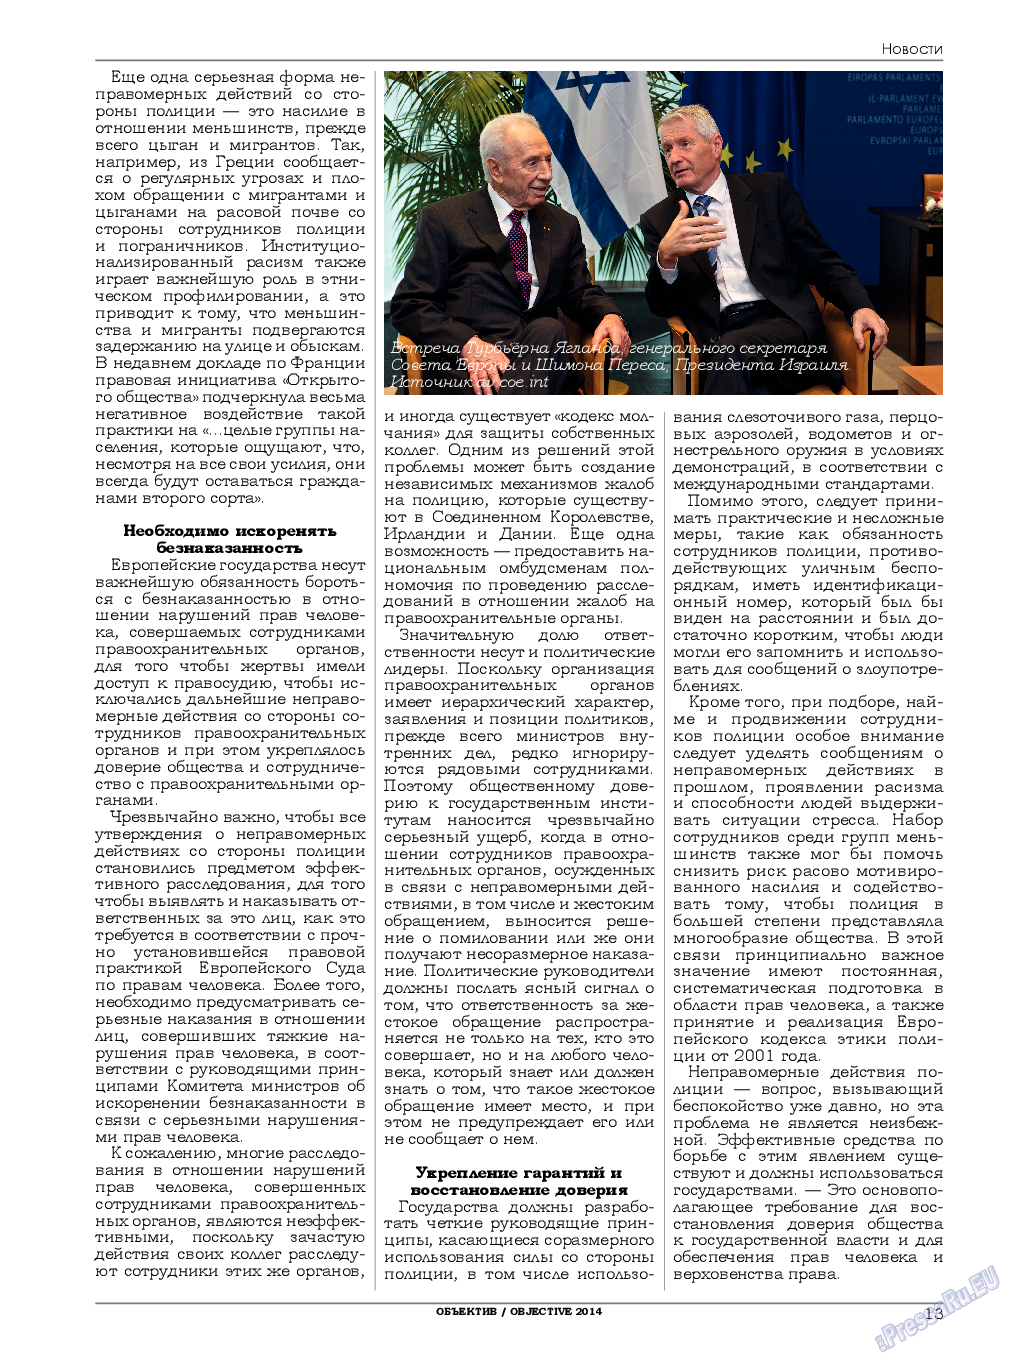 Объектив EU, журнал. 2014 №2 стр.13